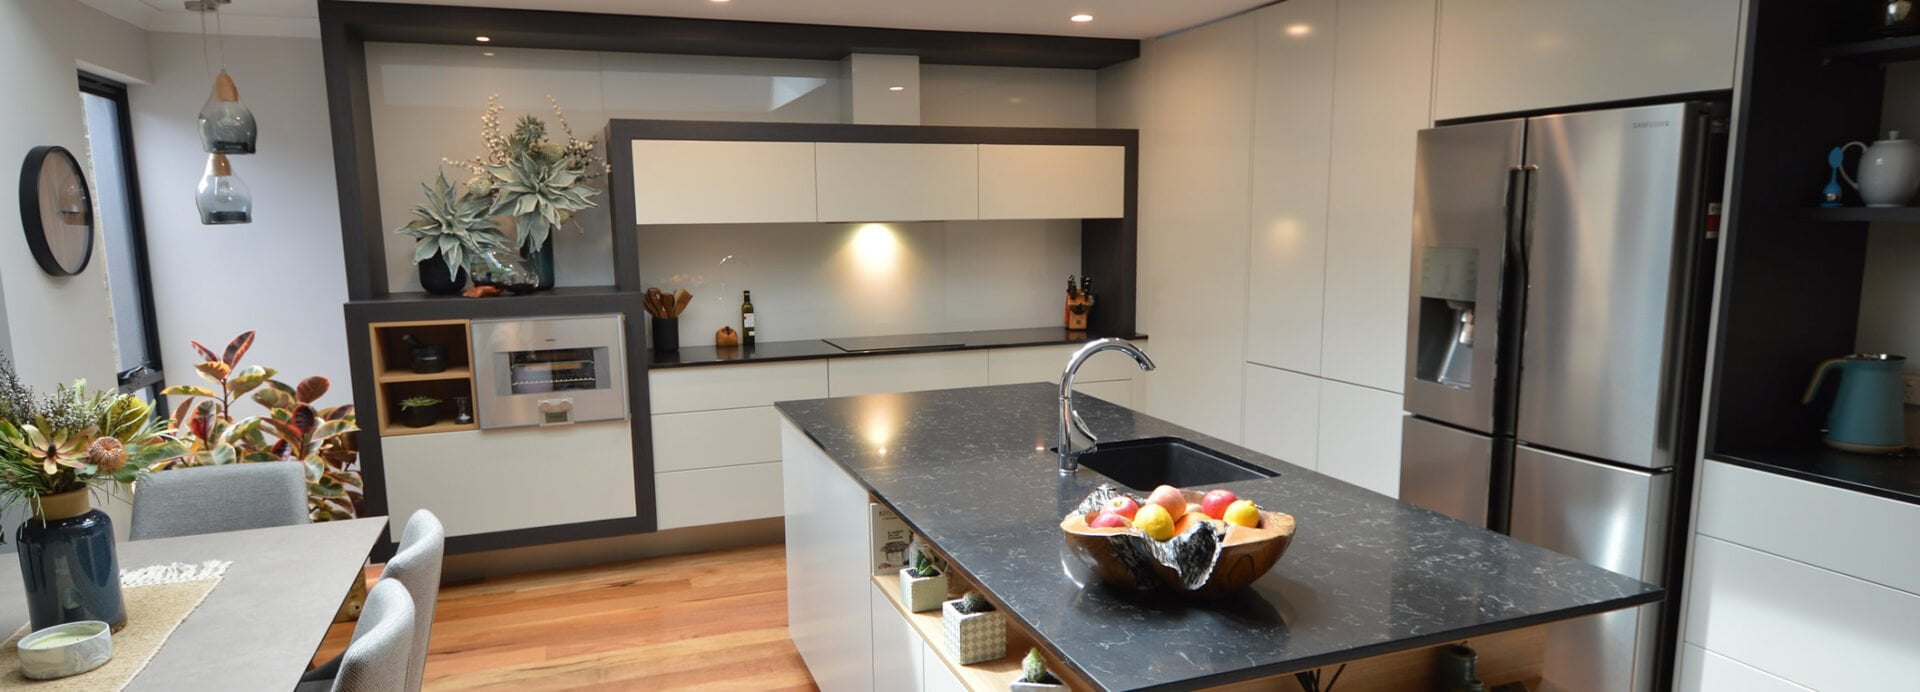 Kitchen Renovations Perth 𝗞𝗶𝘁𝗰𝗵𝗲𝗻𝘀 𝗣𝗲𝗿𝘁𝗵